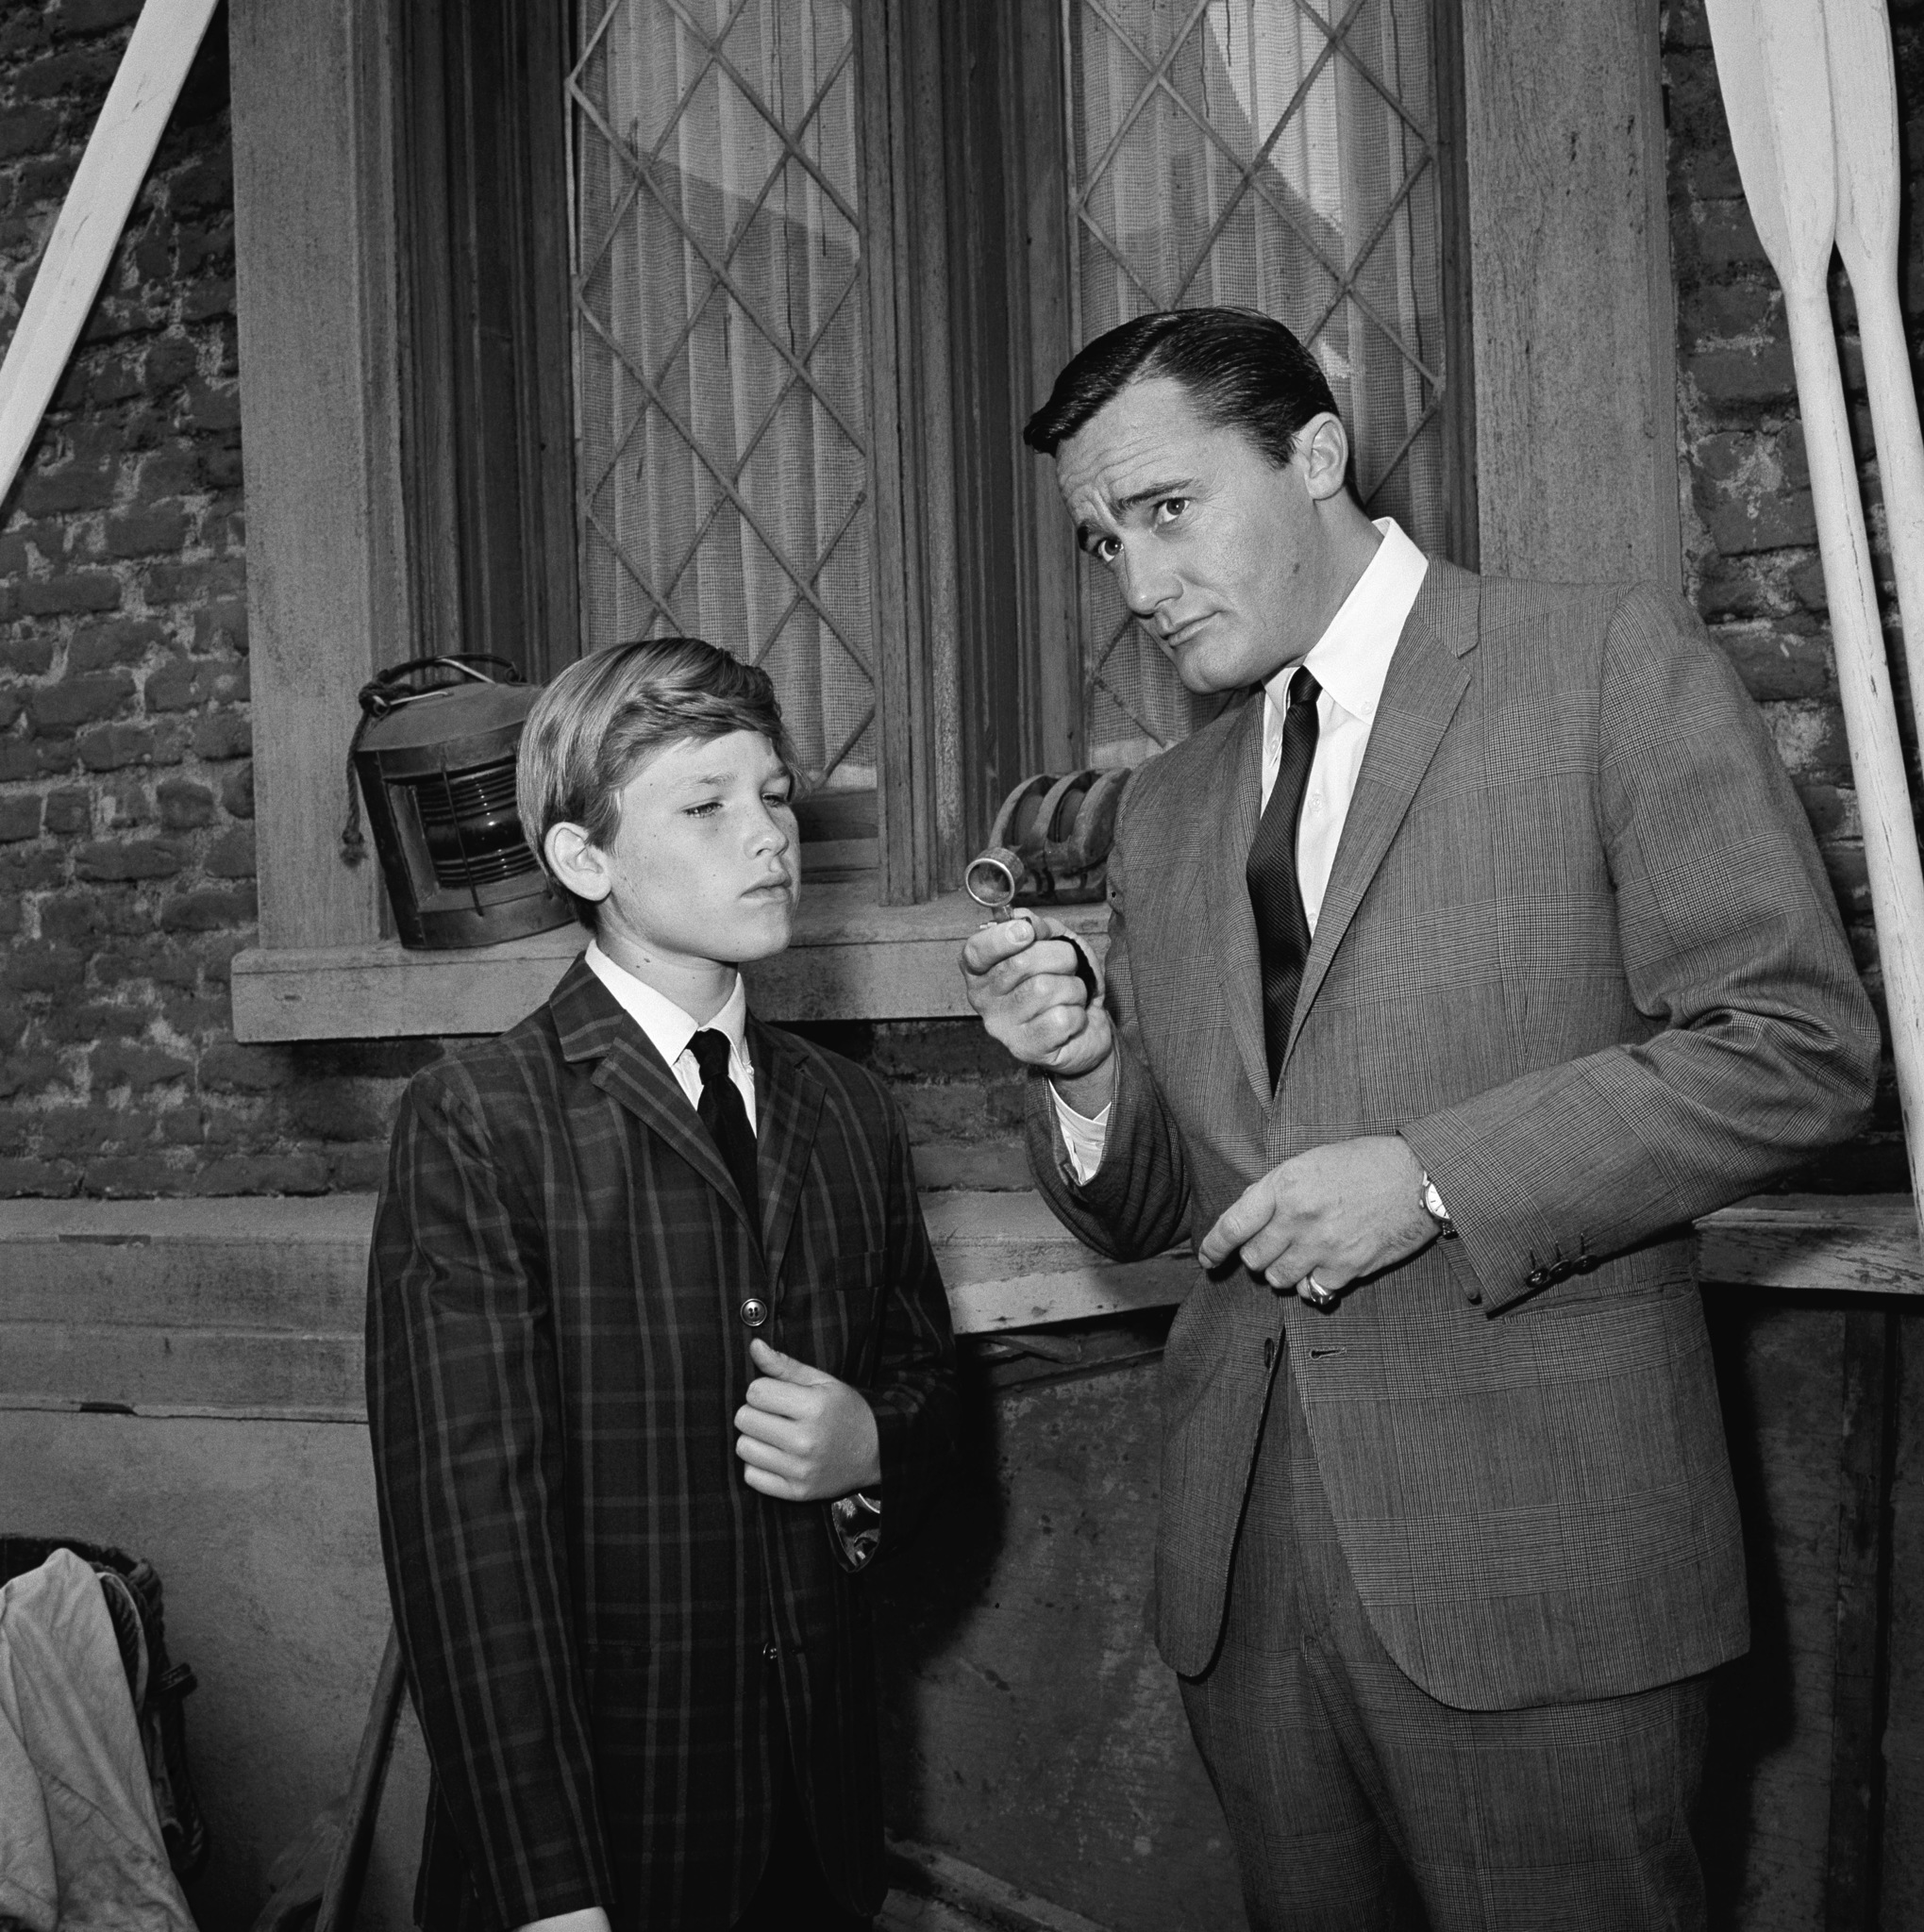 Kurt Russell and Robert Vaughn in The Man from U.N.C.L.E. (1964)